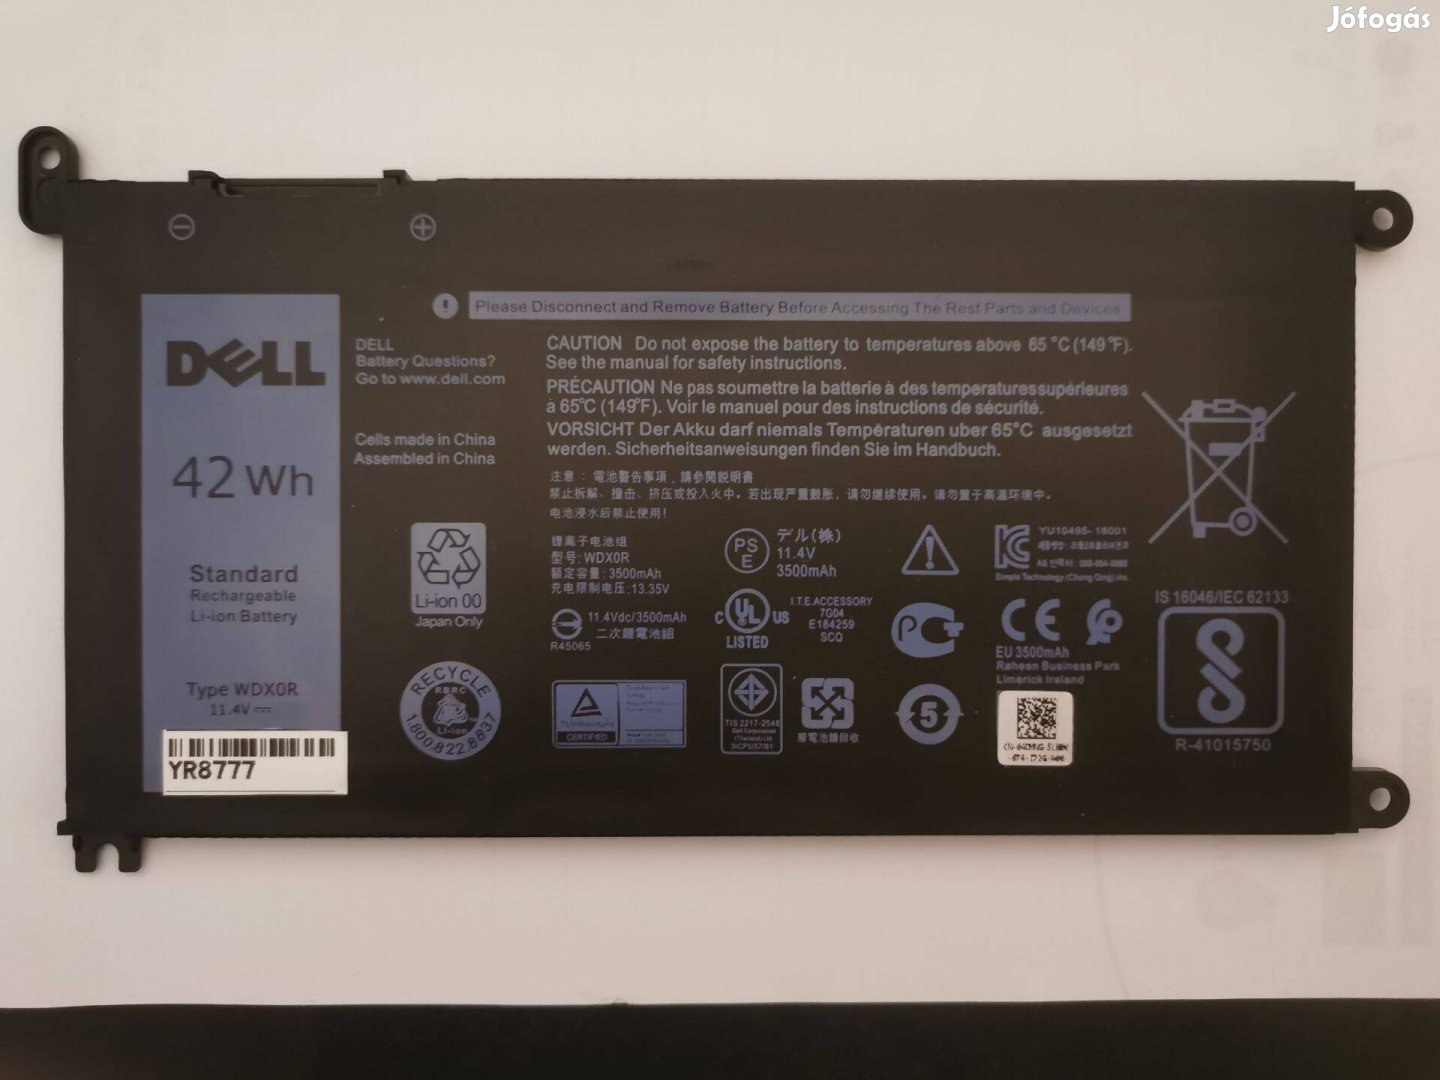 Dell eredeti Wdx0R akkumulátor